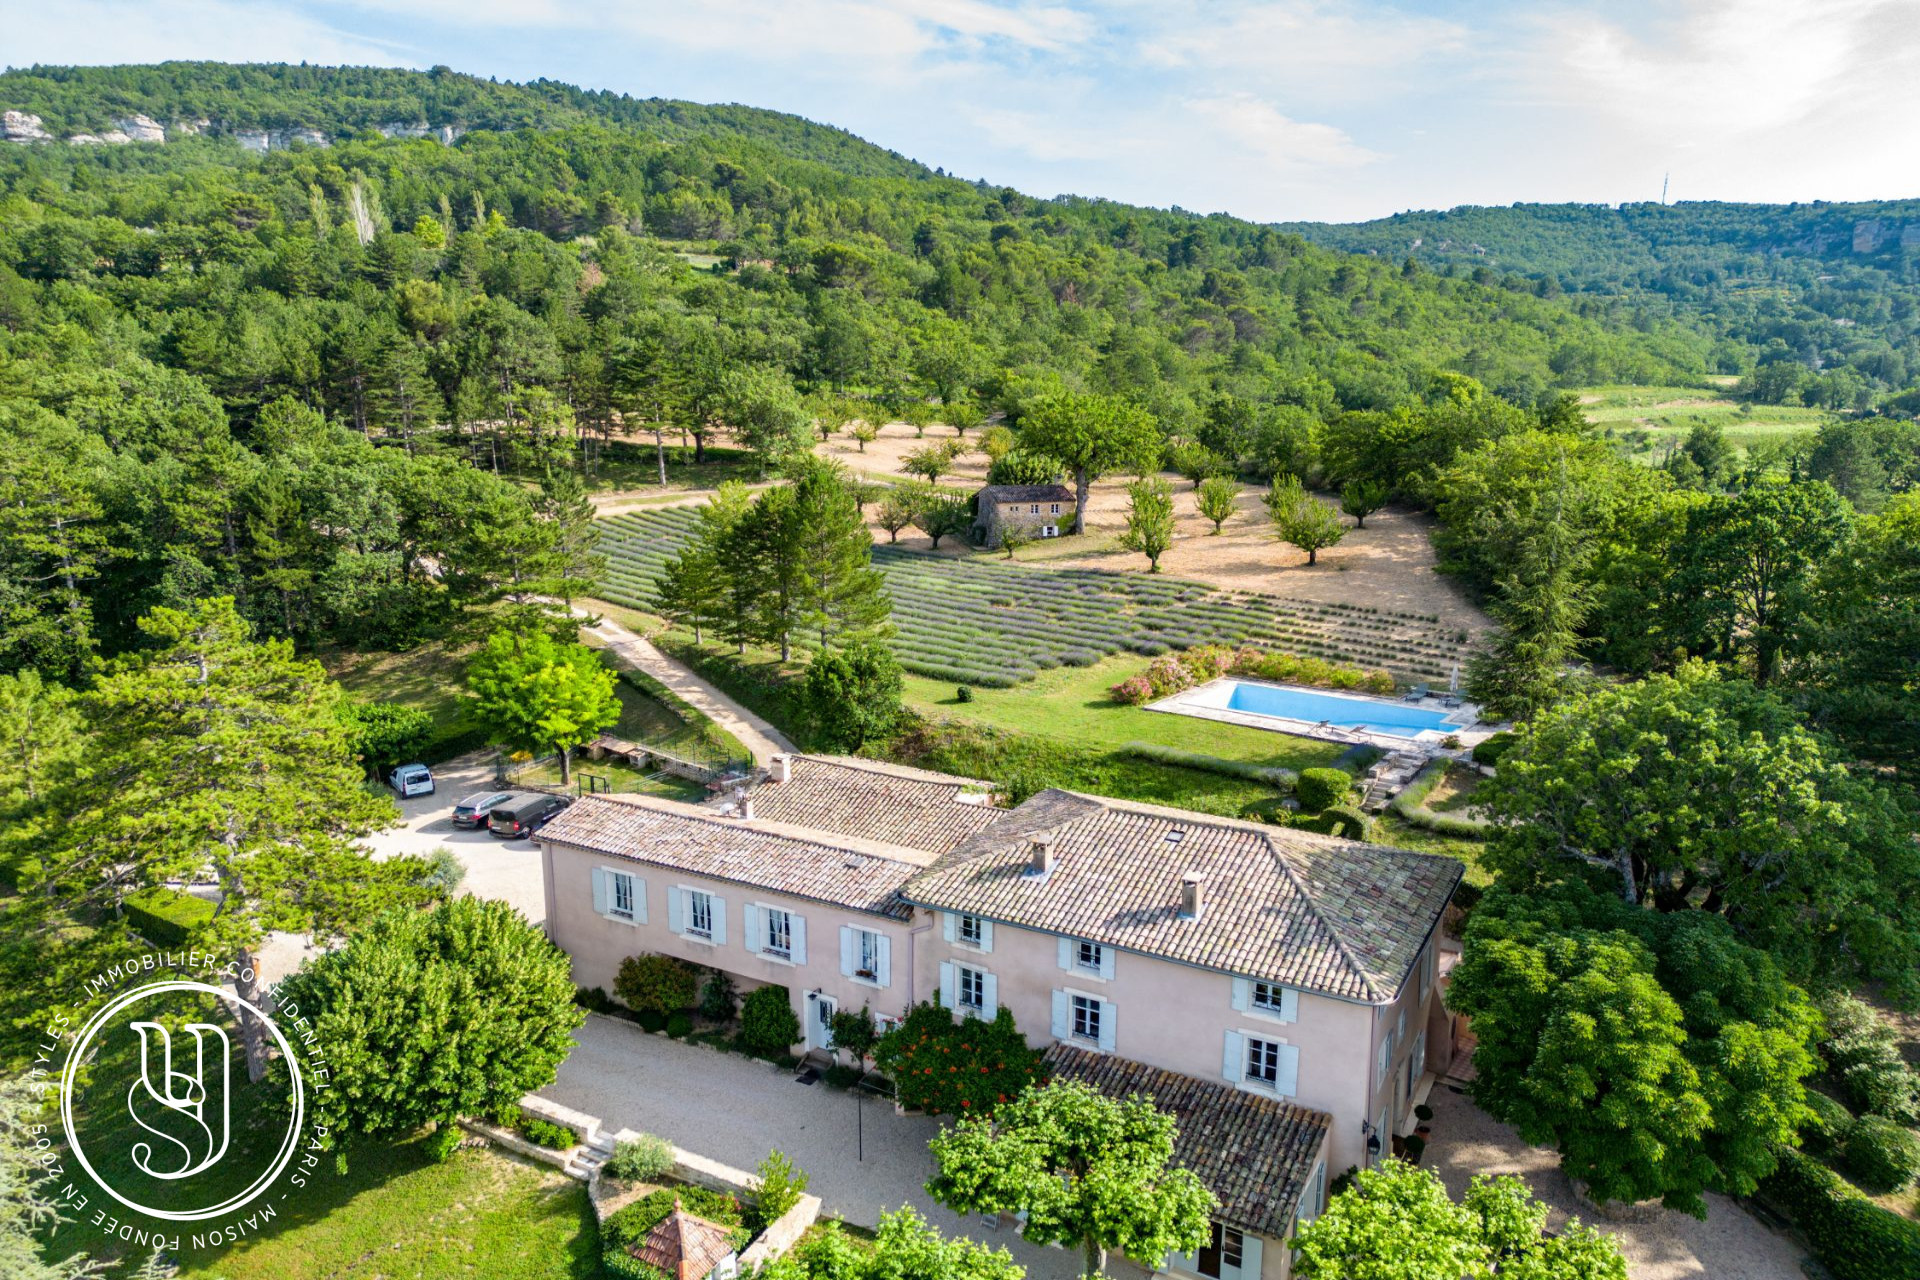 Saignon - a Provençal countryside with breathtaking views - image 5